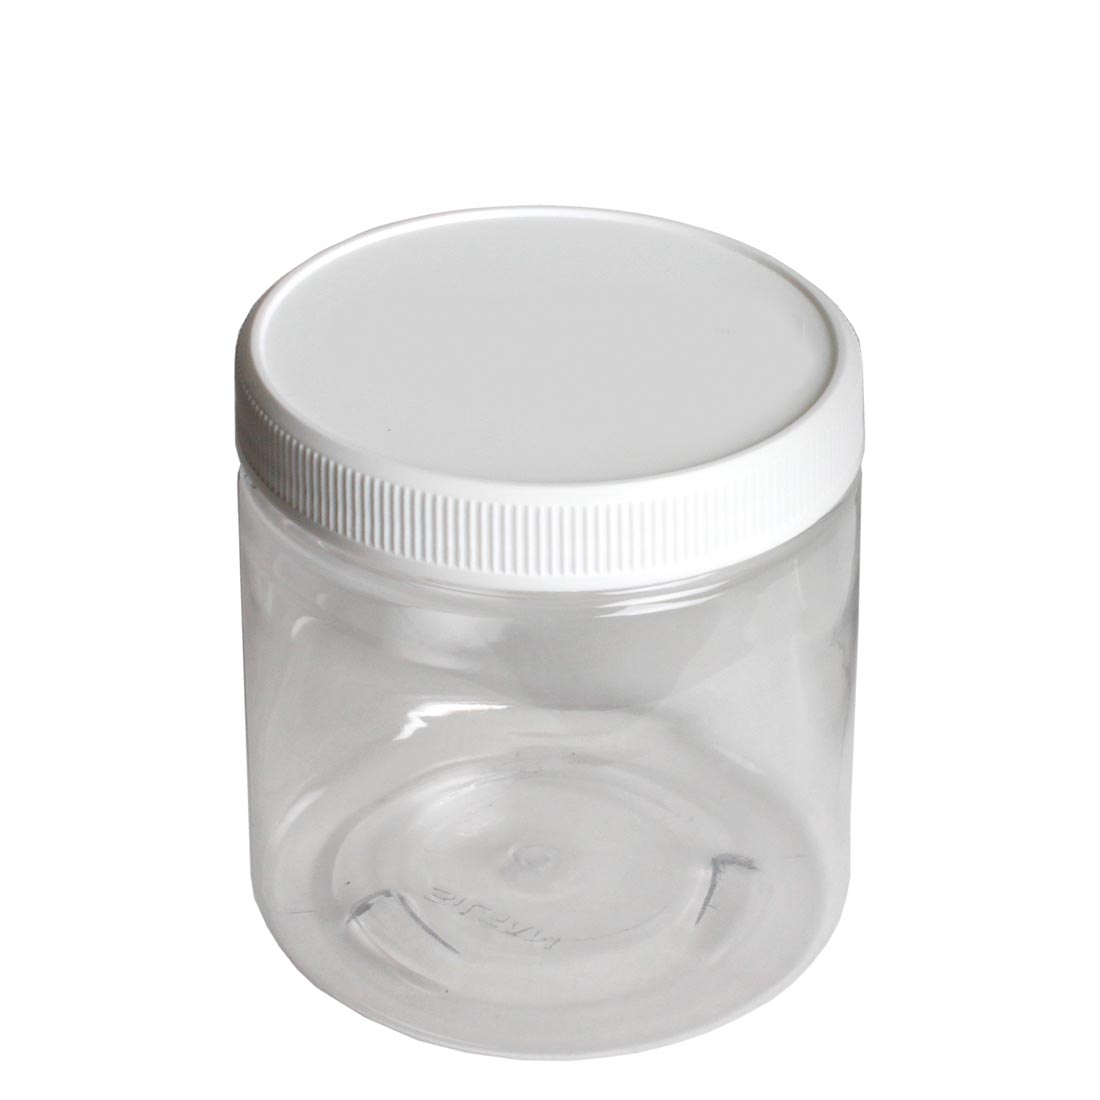 Empty Plastic Jar with lid